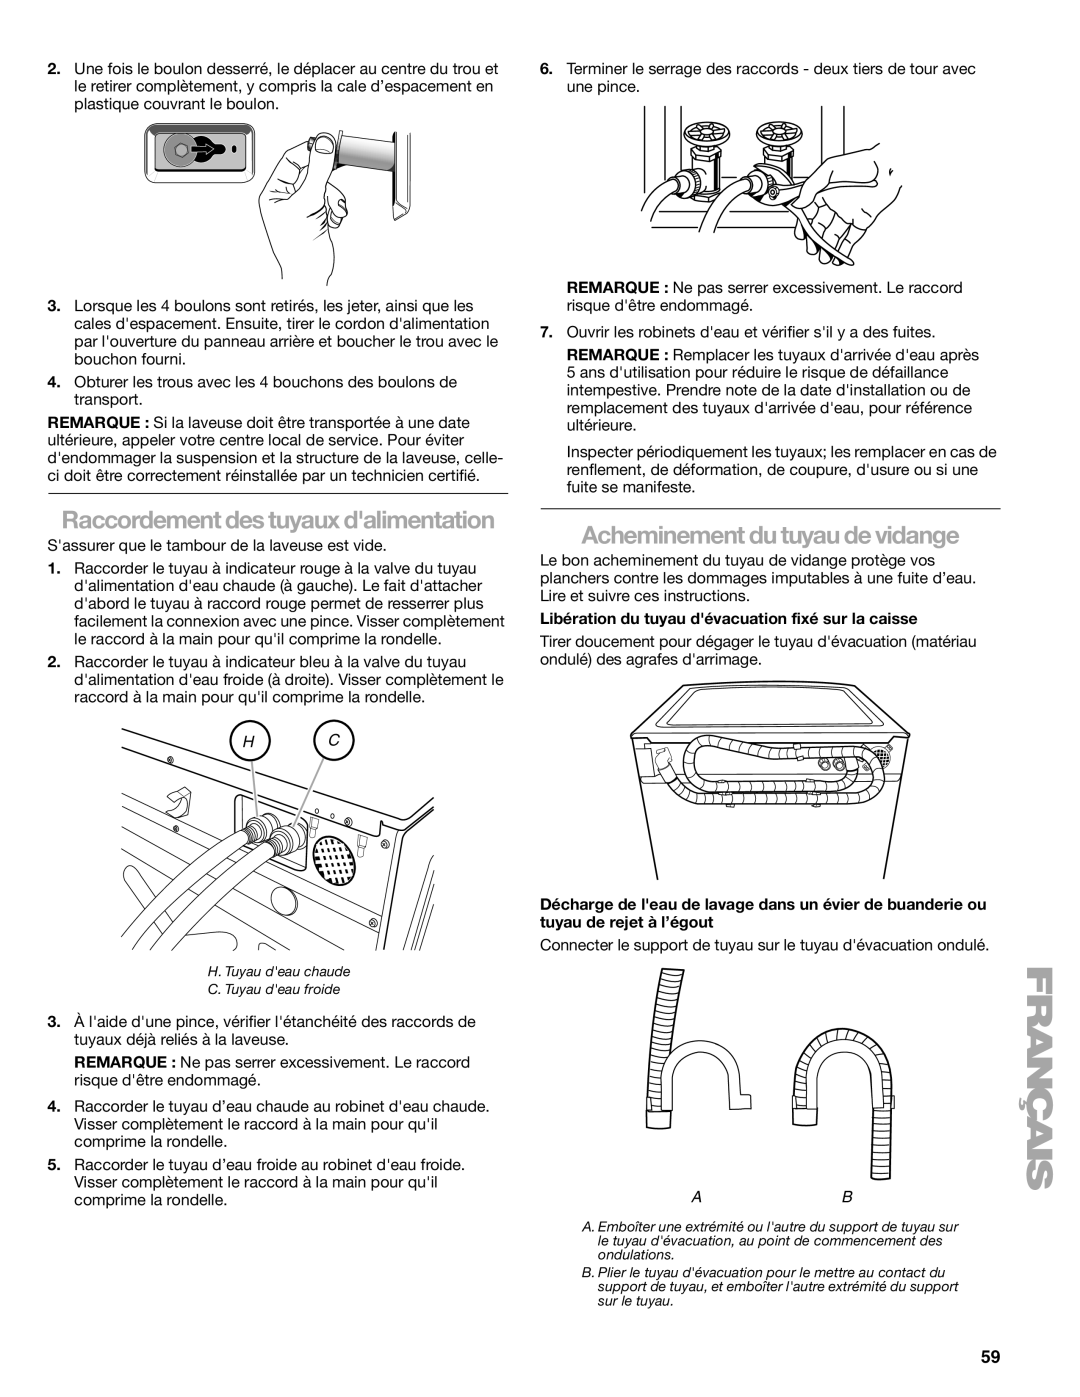 Kenmore W10133487A manual Acheminement du tuyau de vidange, Raccordement des tuyaux dalimentation 